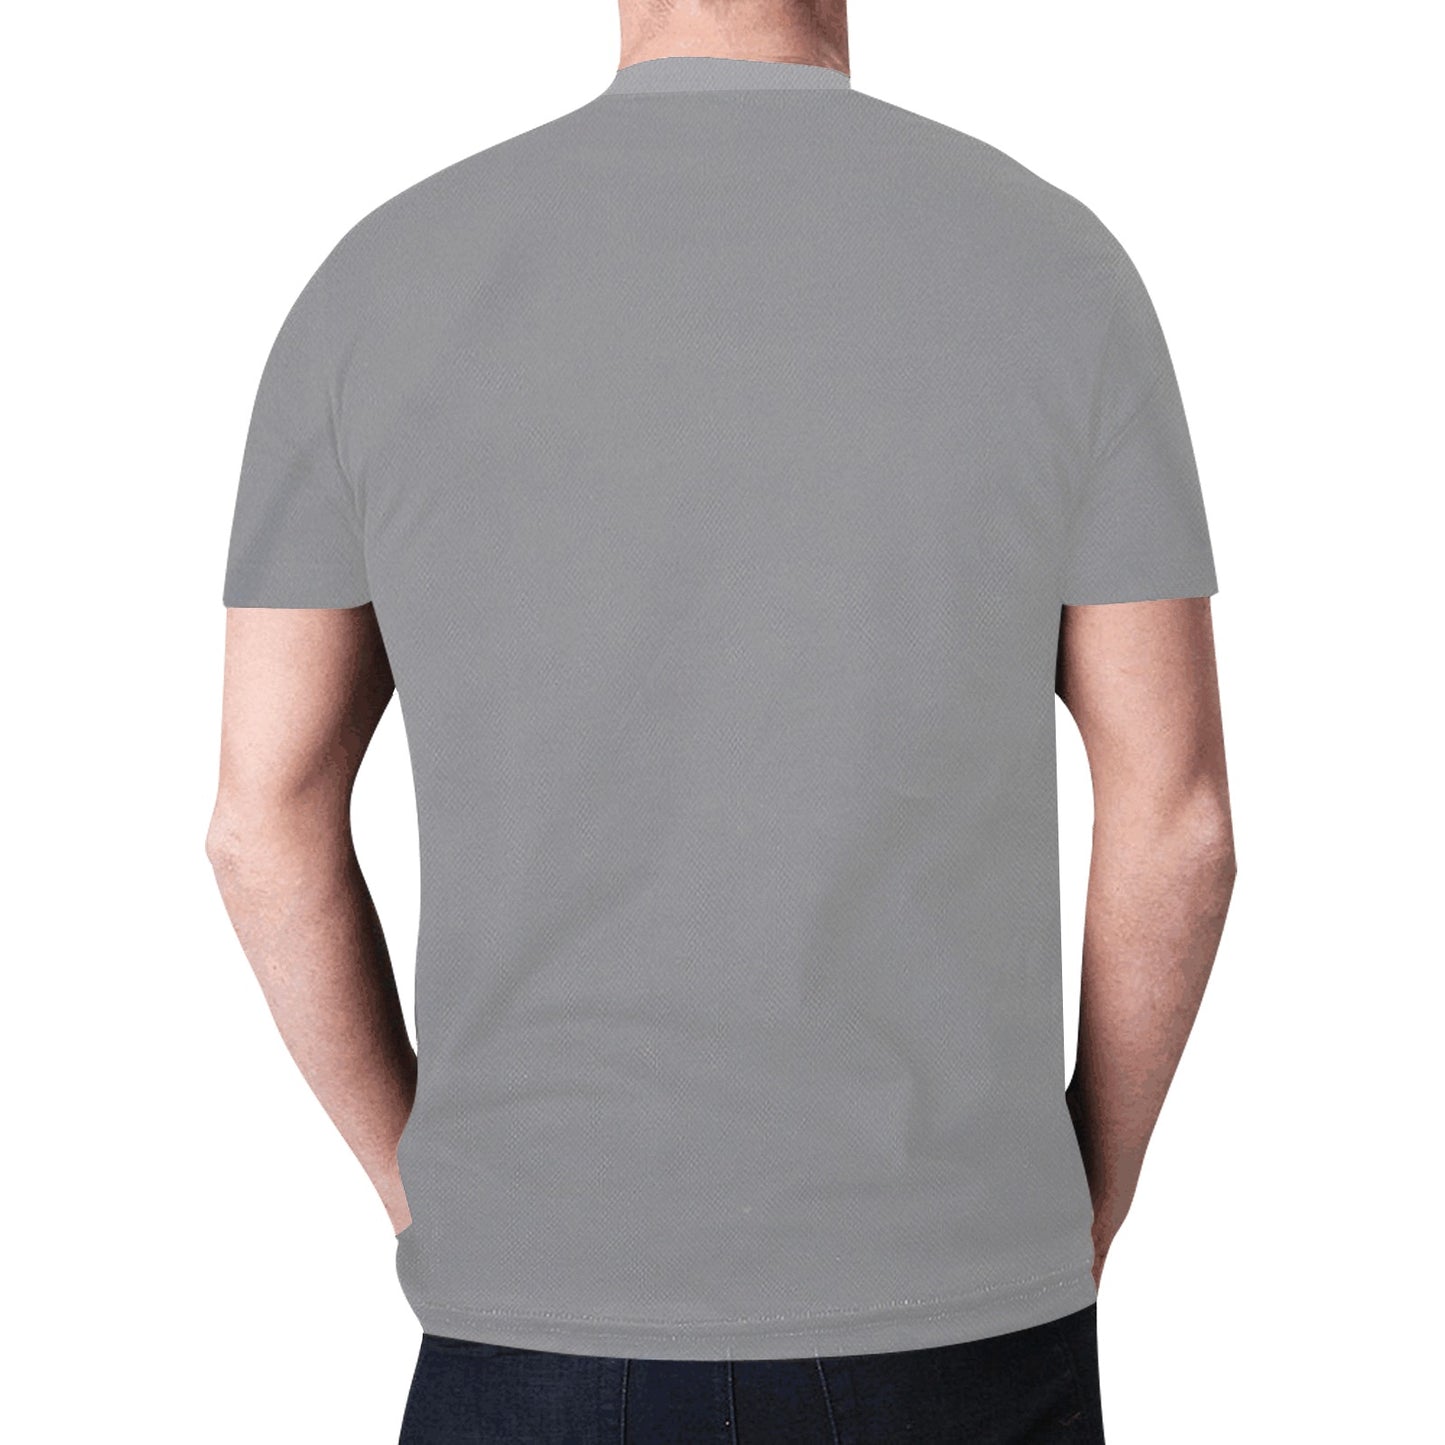 RTMColors#7 T-shirt for Men